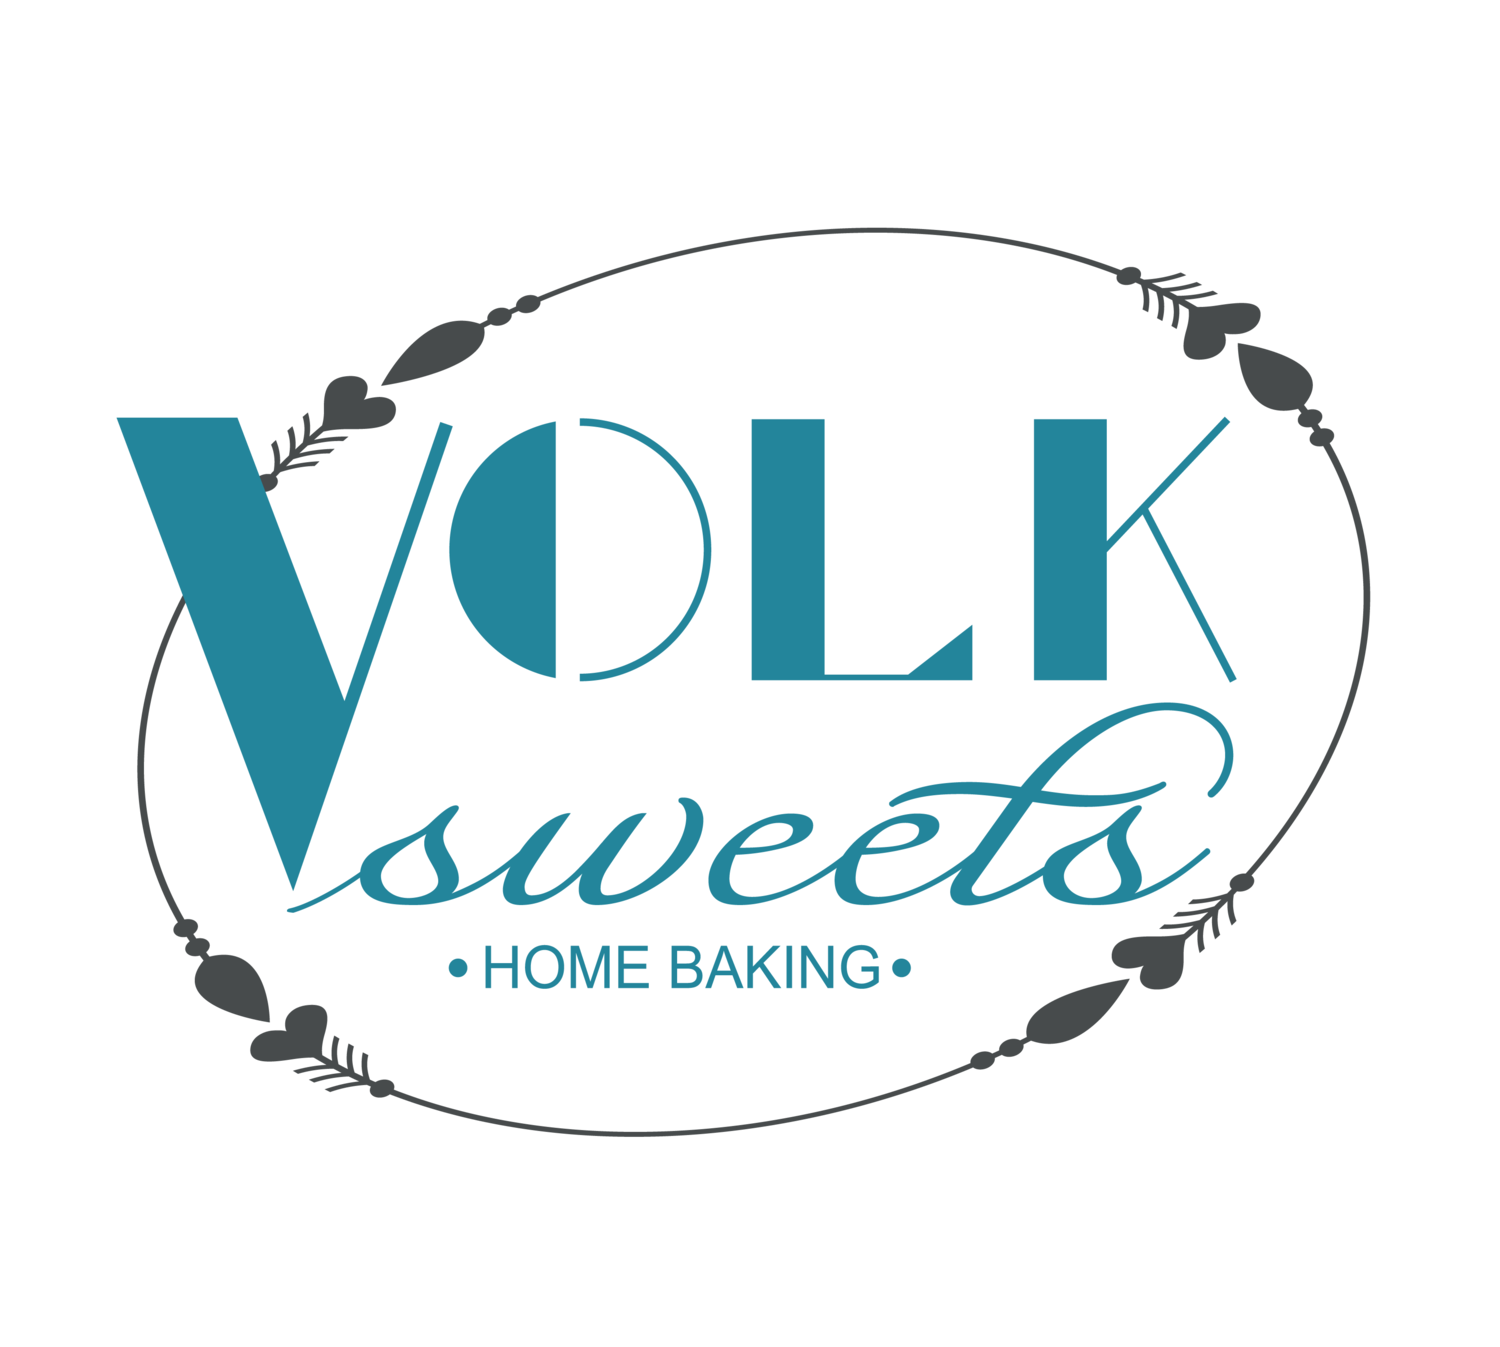 Volk Sweets